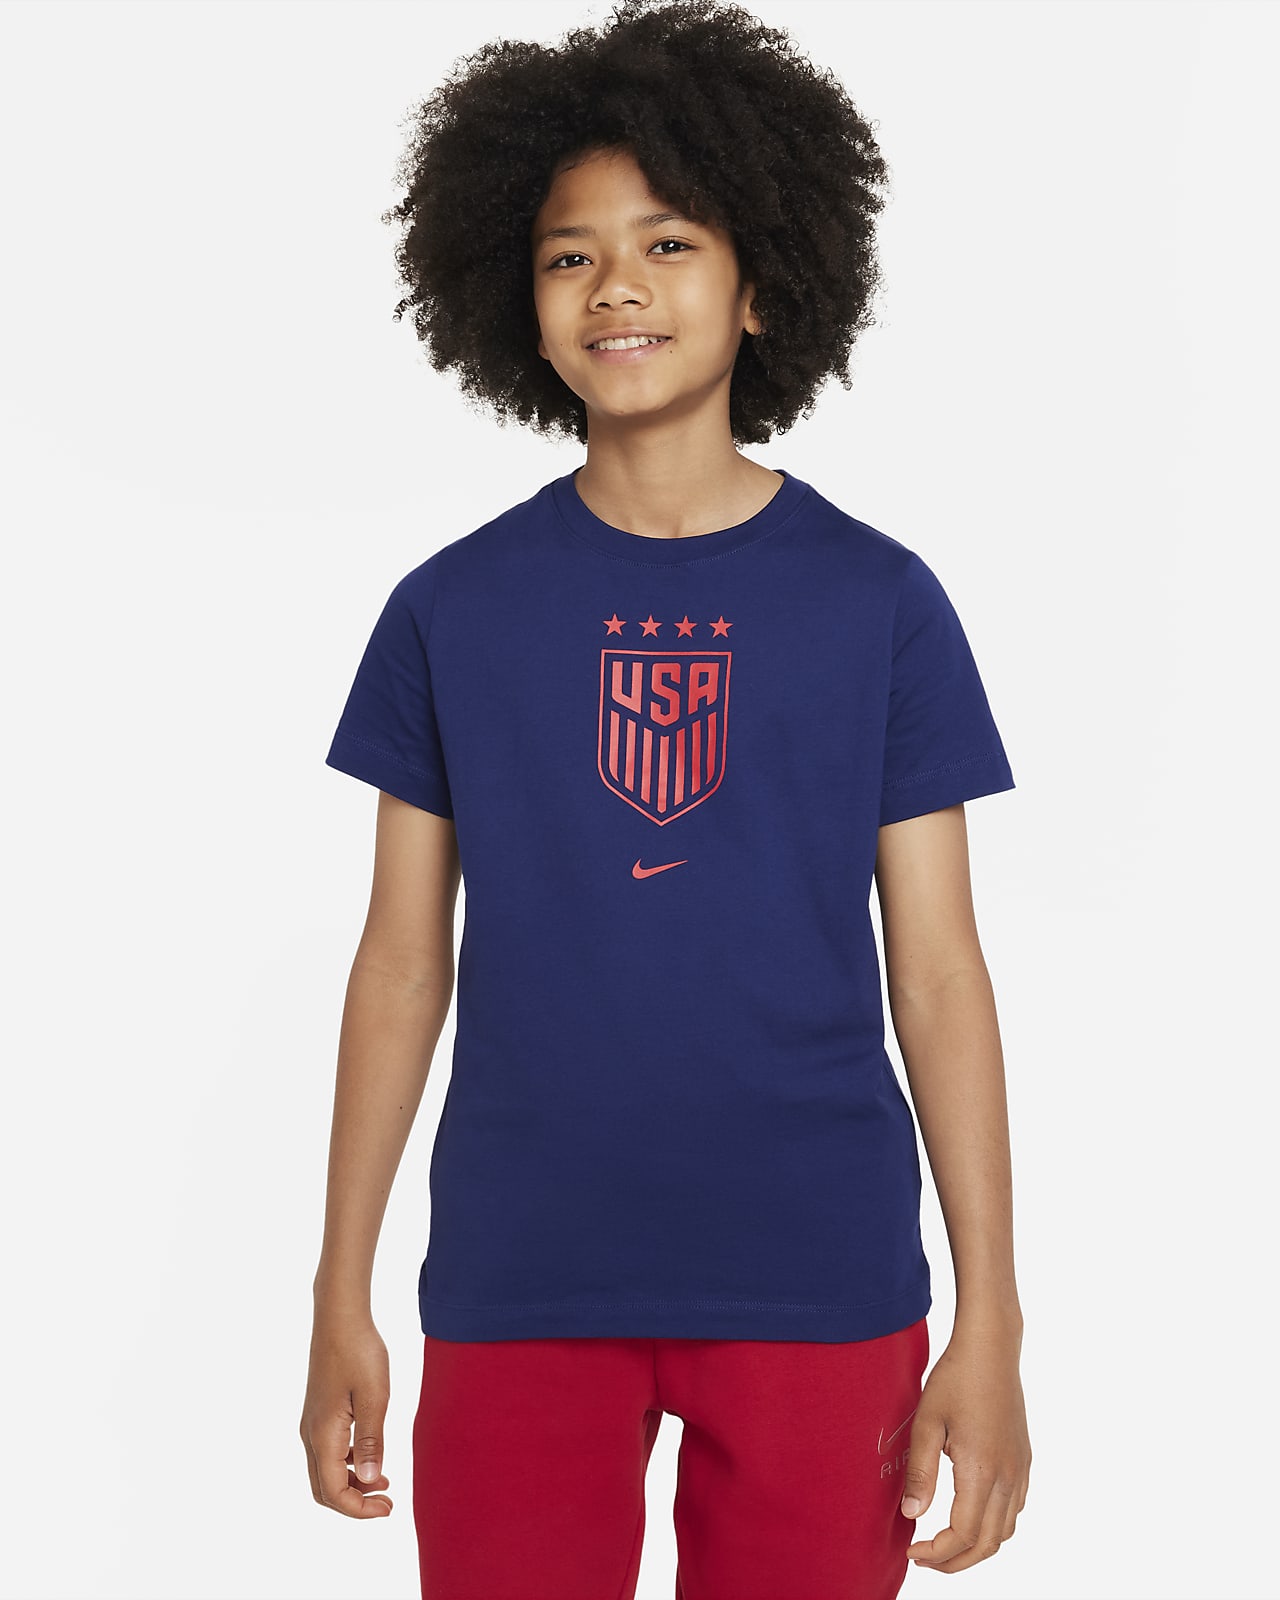 USWNT Big Kids' Nike Soccer T-Shirt